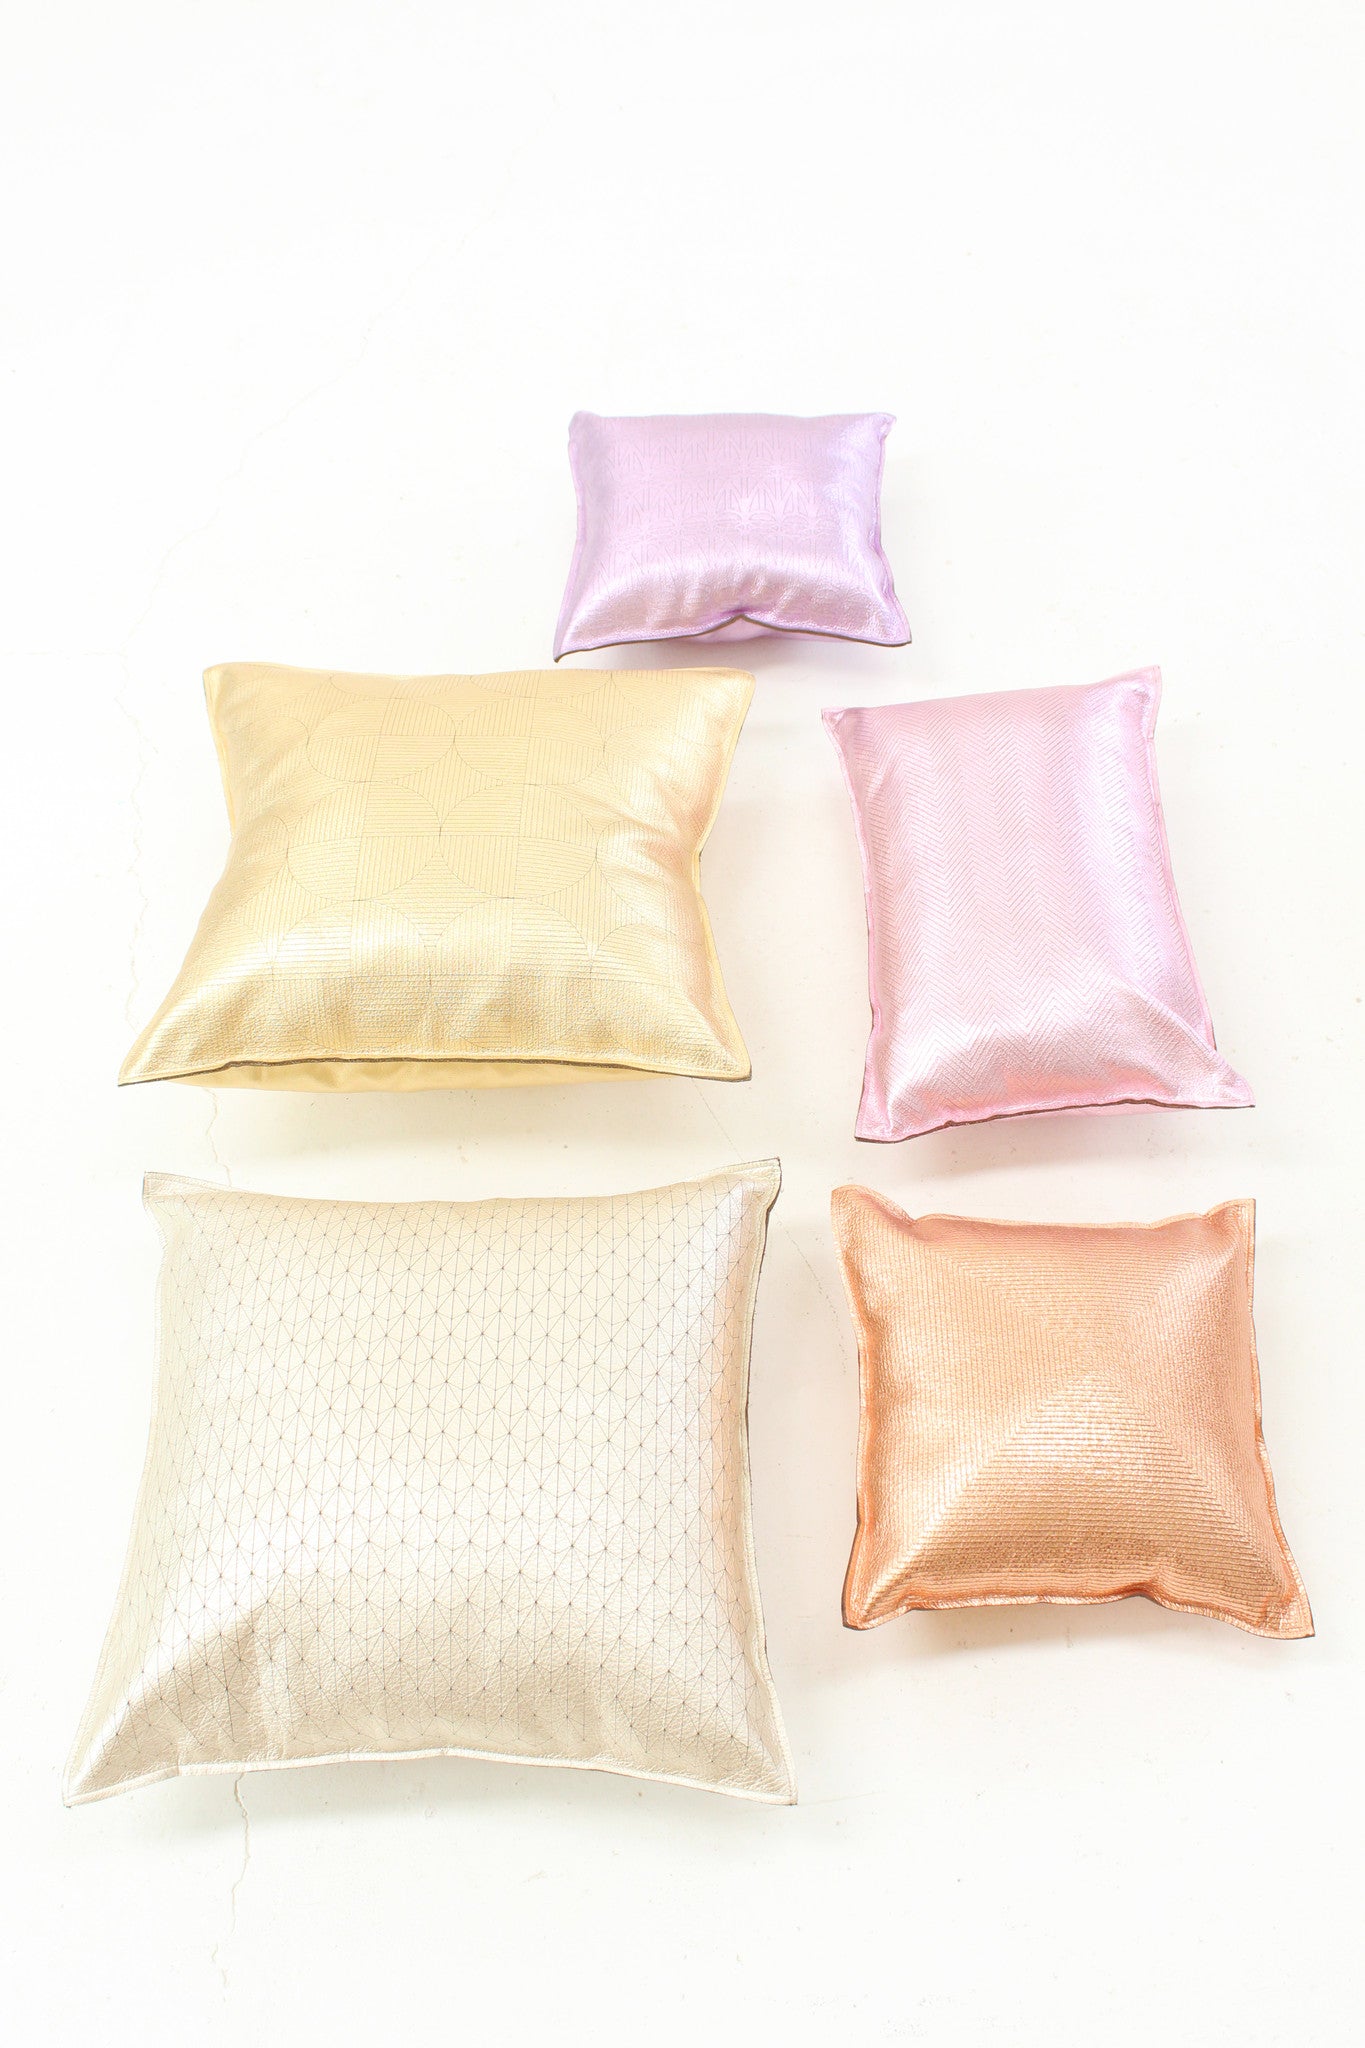 Beklina Metallic Pillows